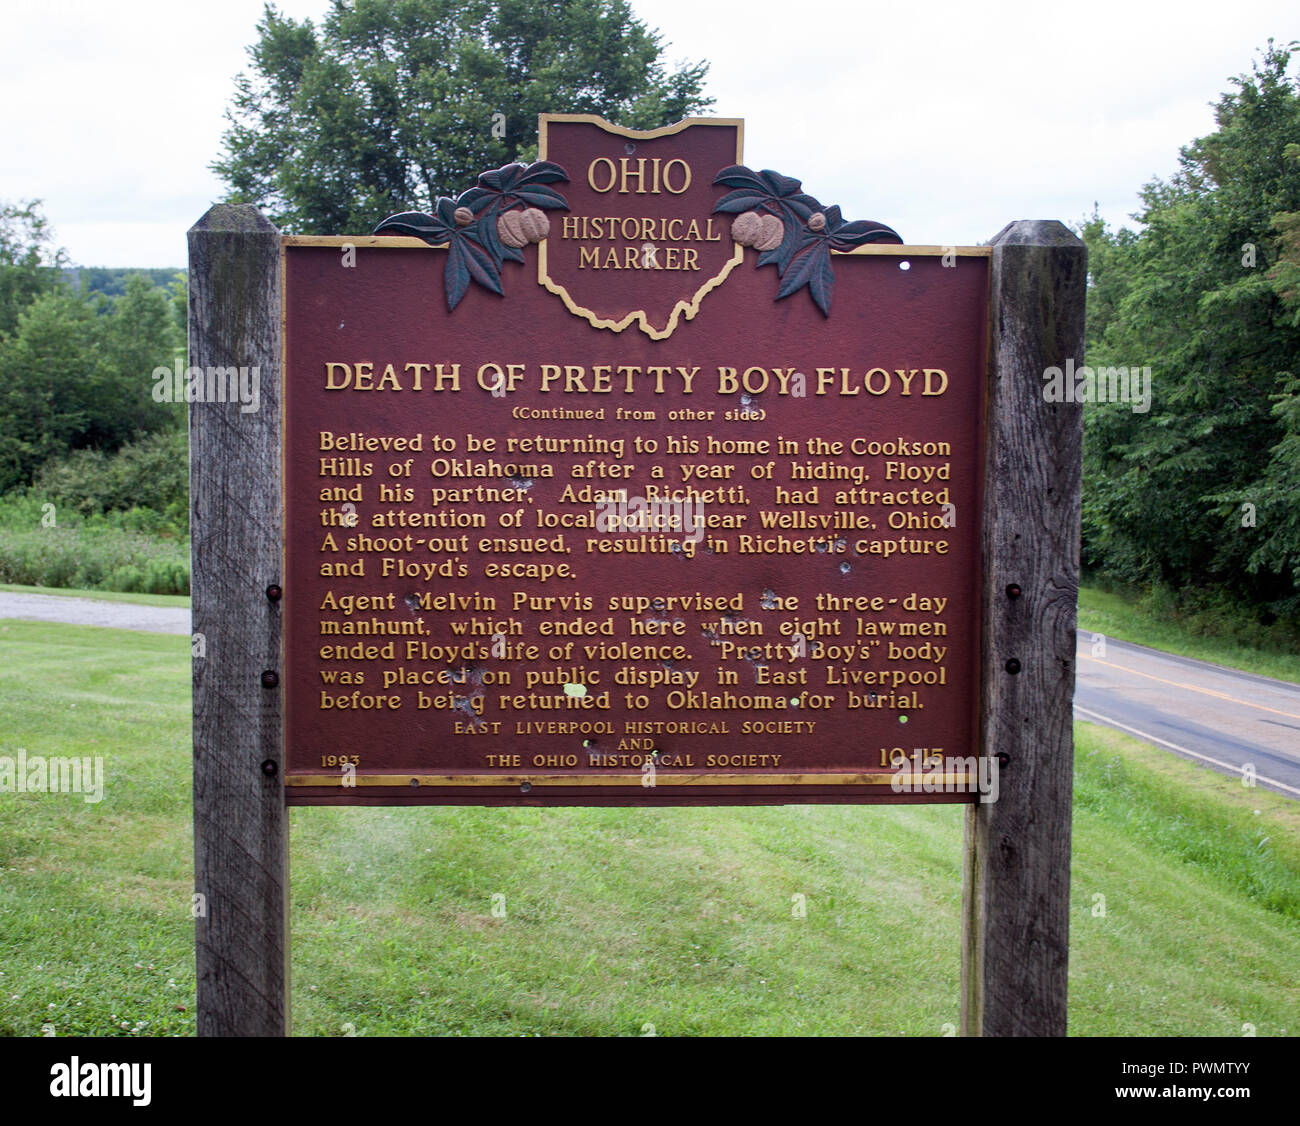 Death of Pretty Boy Floyd marker in Clarkson, Ohio Stock Photo